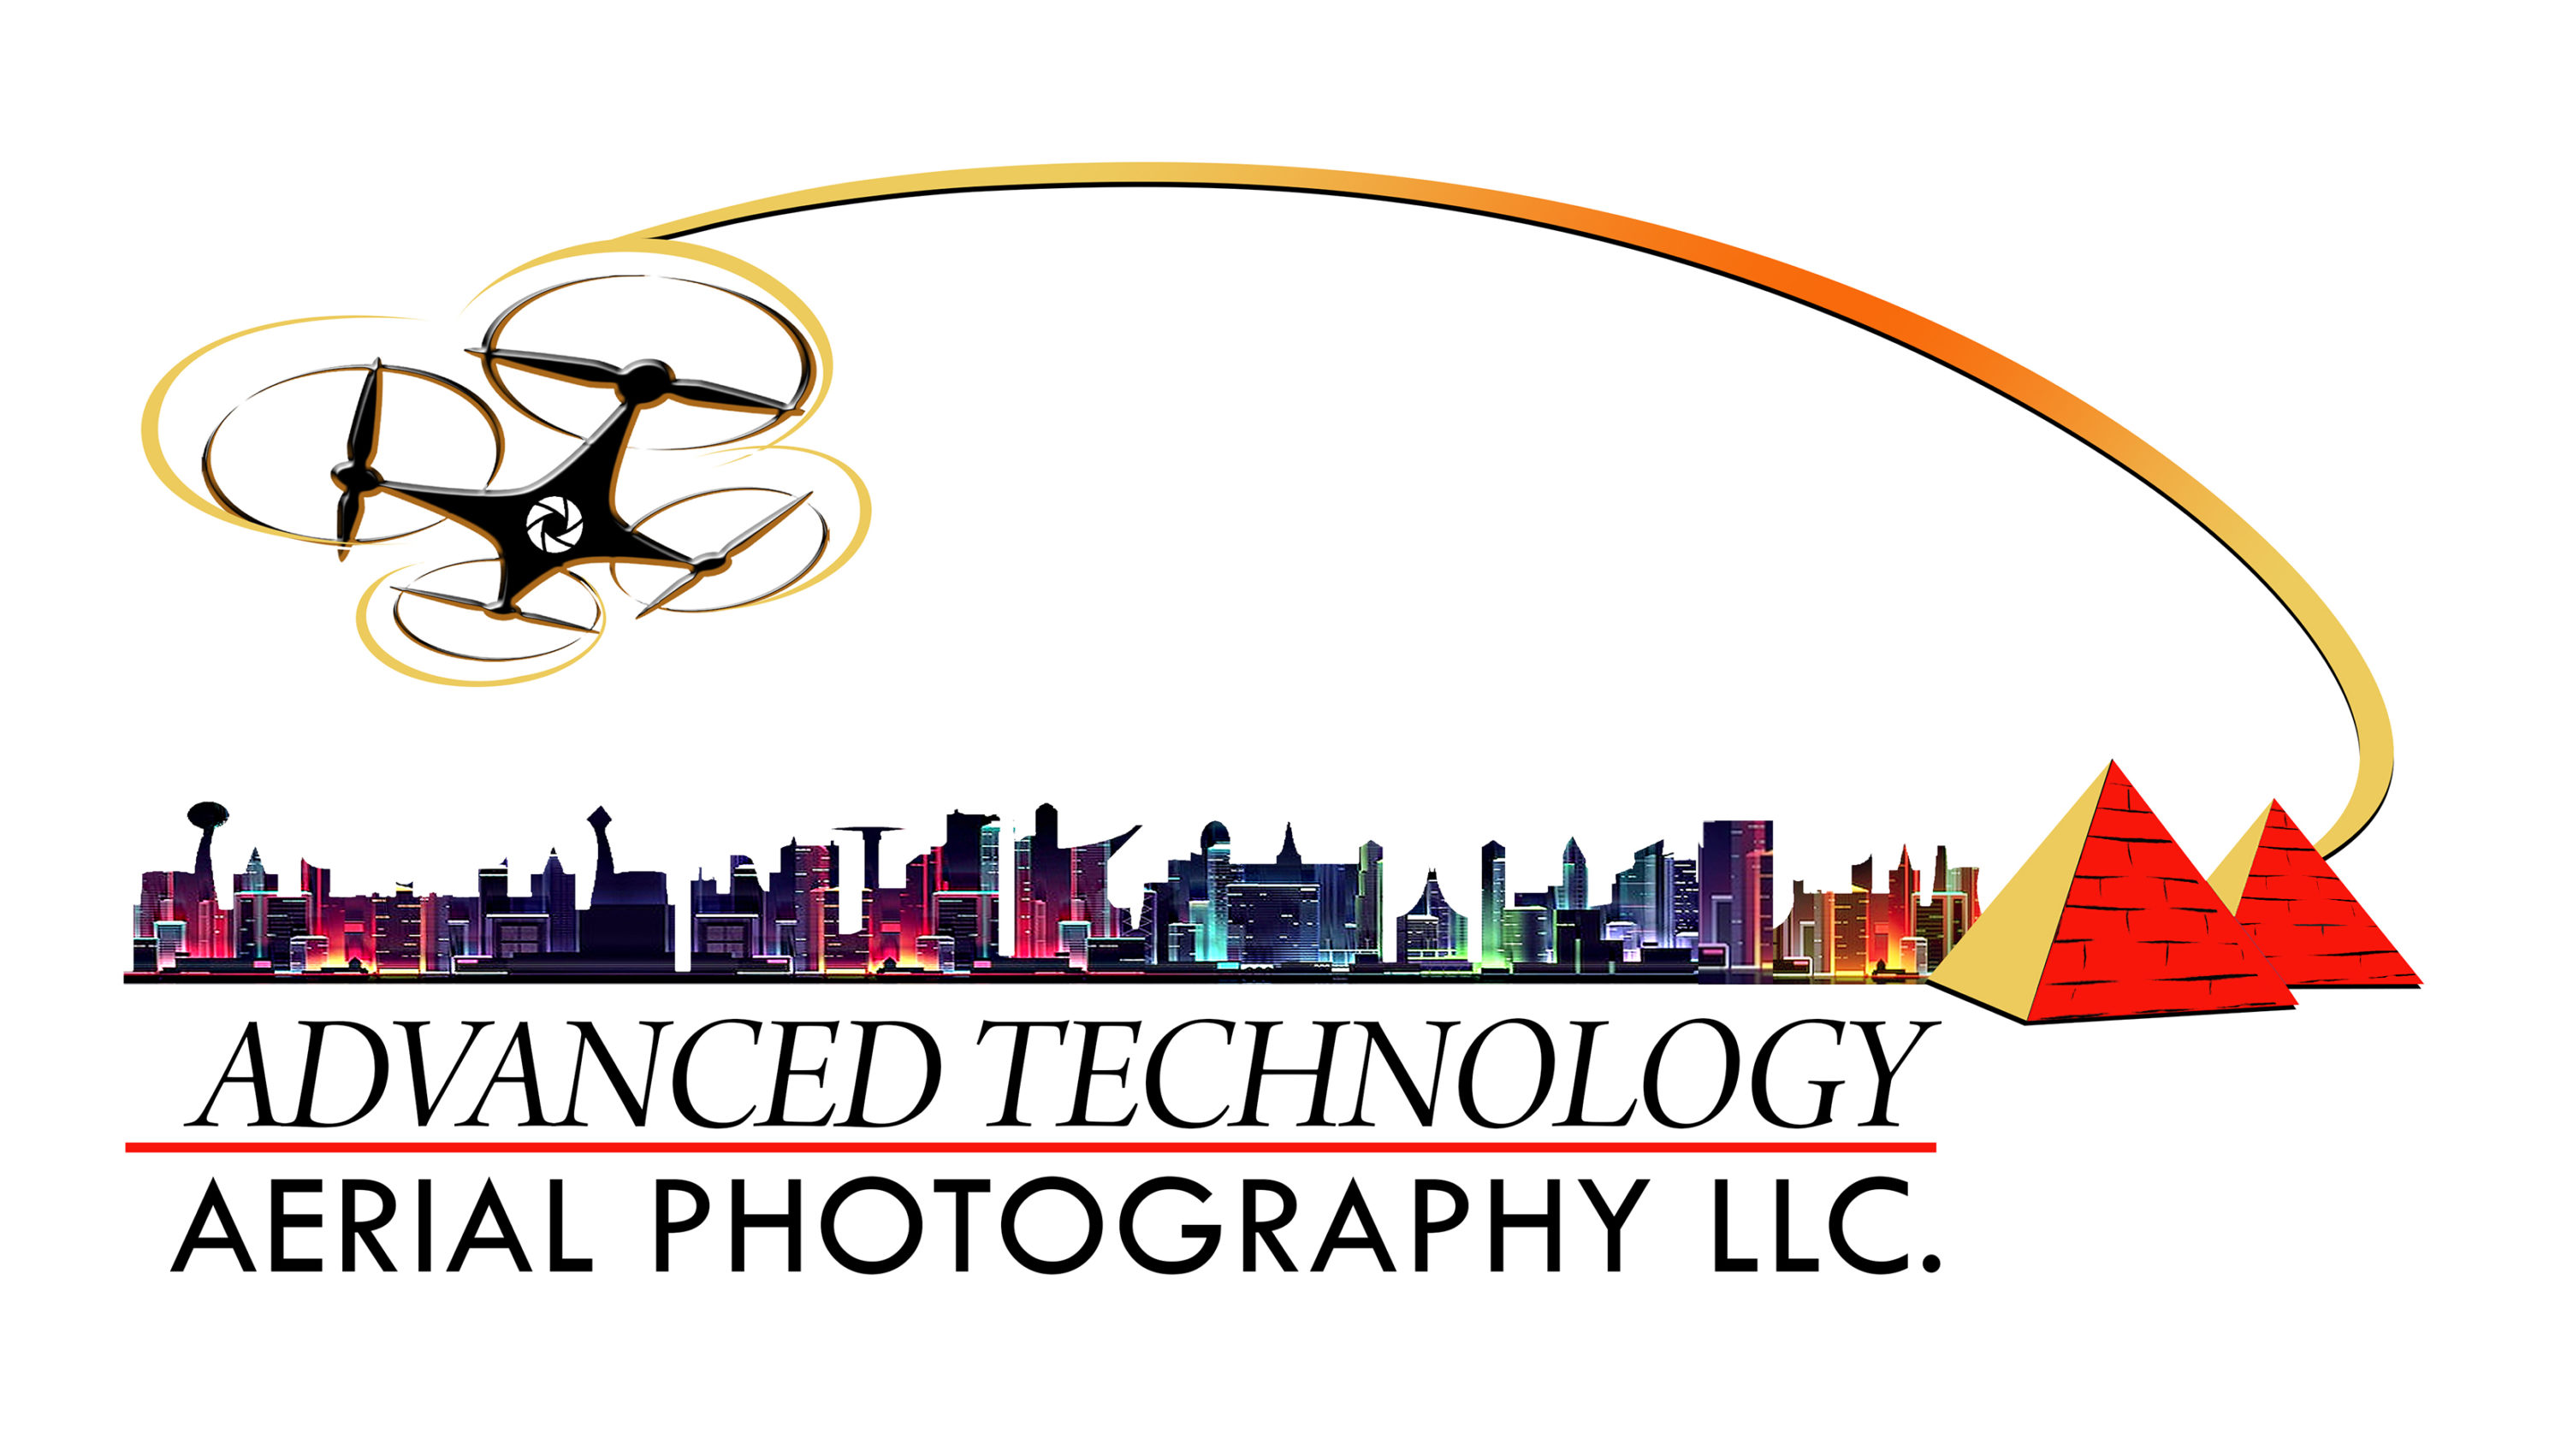 Advanced Technology Aerial Photography LLC.